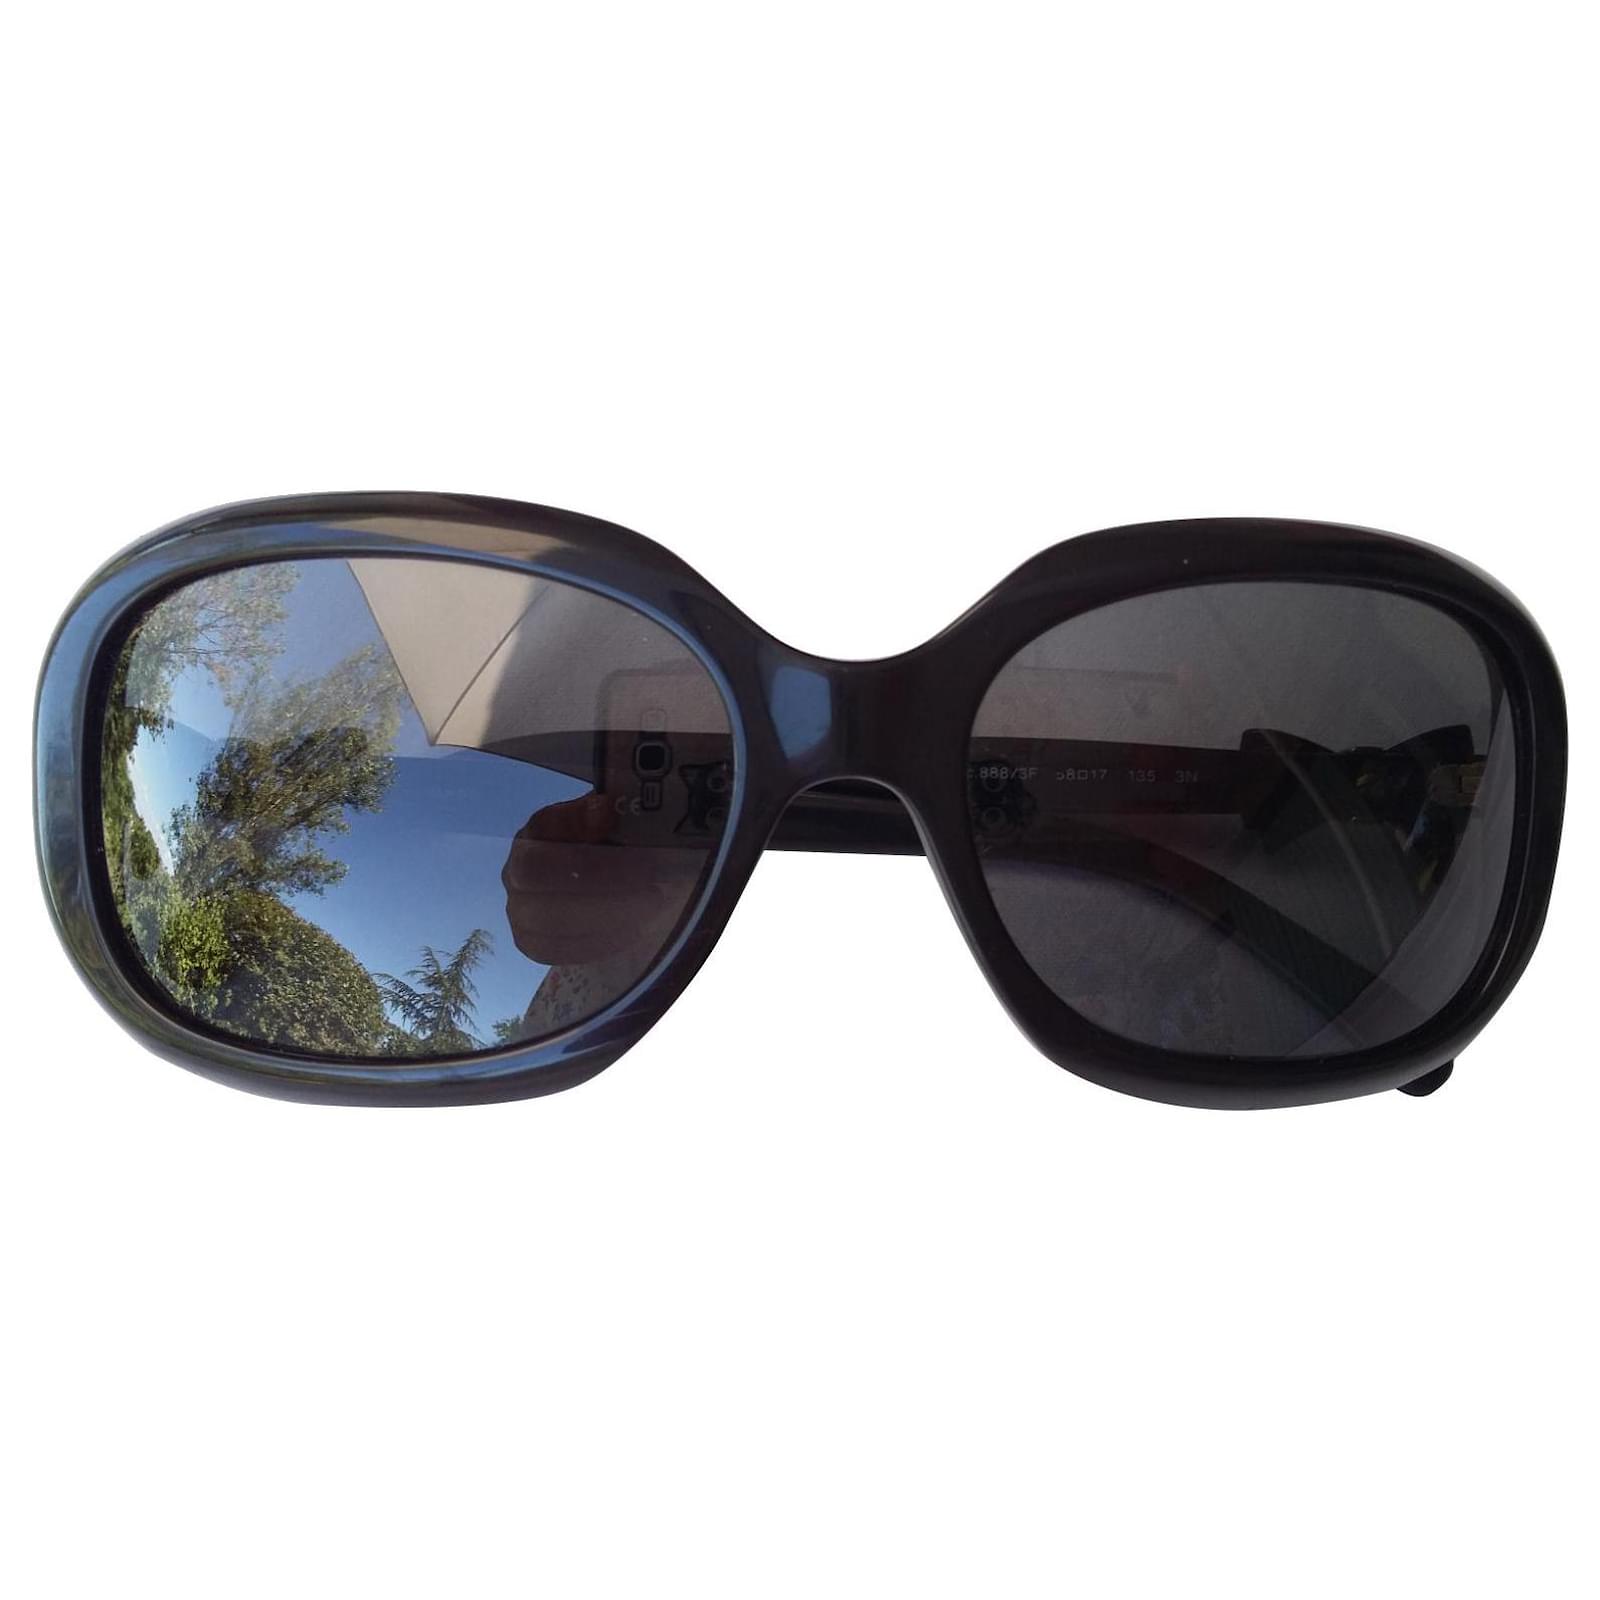 CHANEL PreOwned 1992 chainlink wraparoundframe Sunglasses  Farfetch